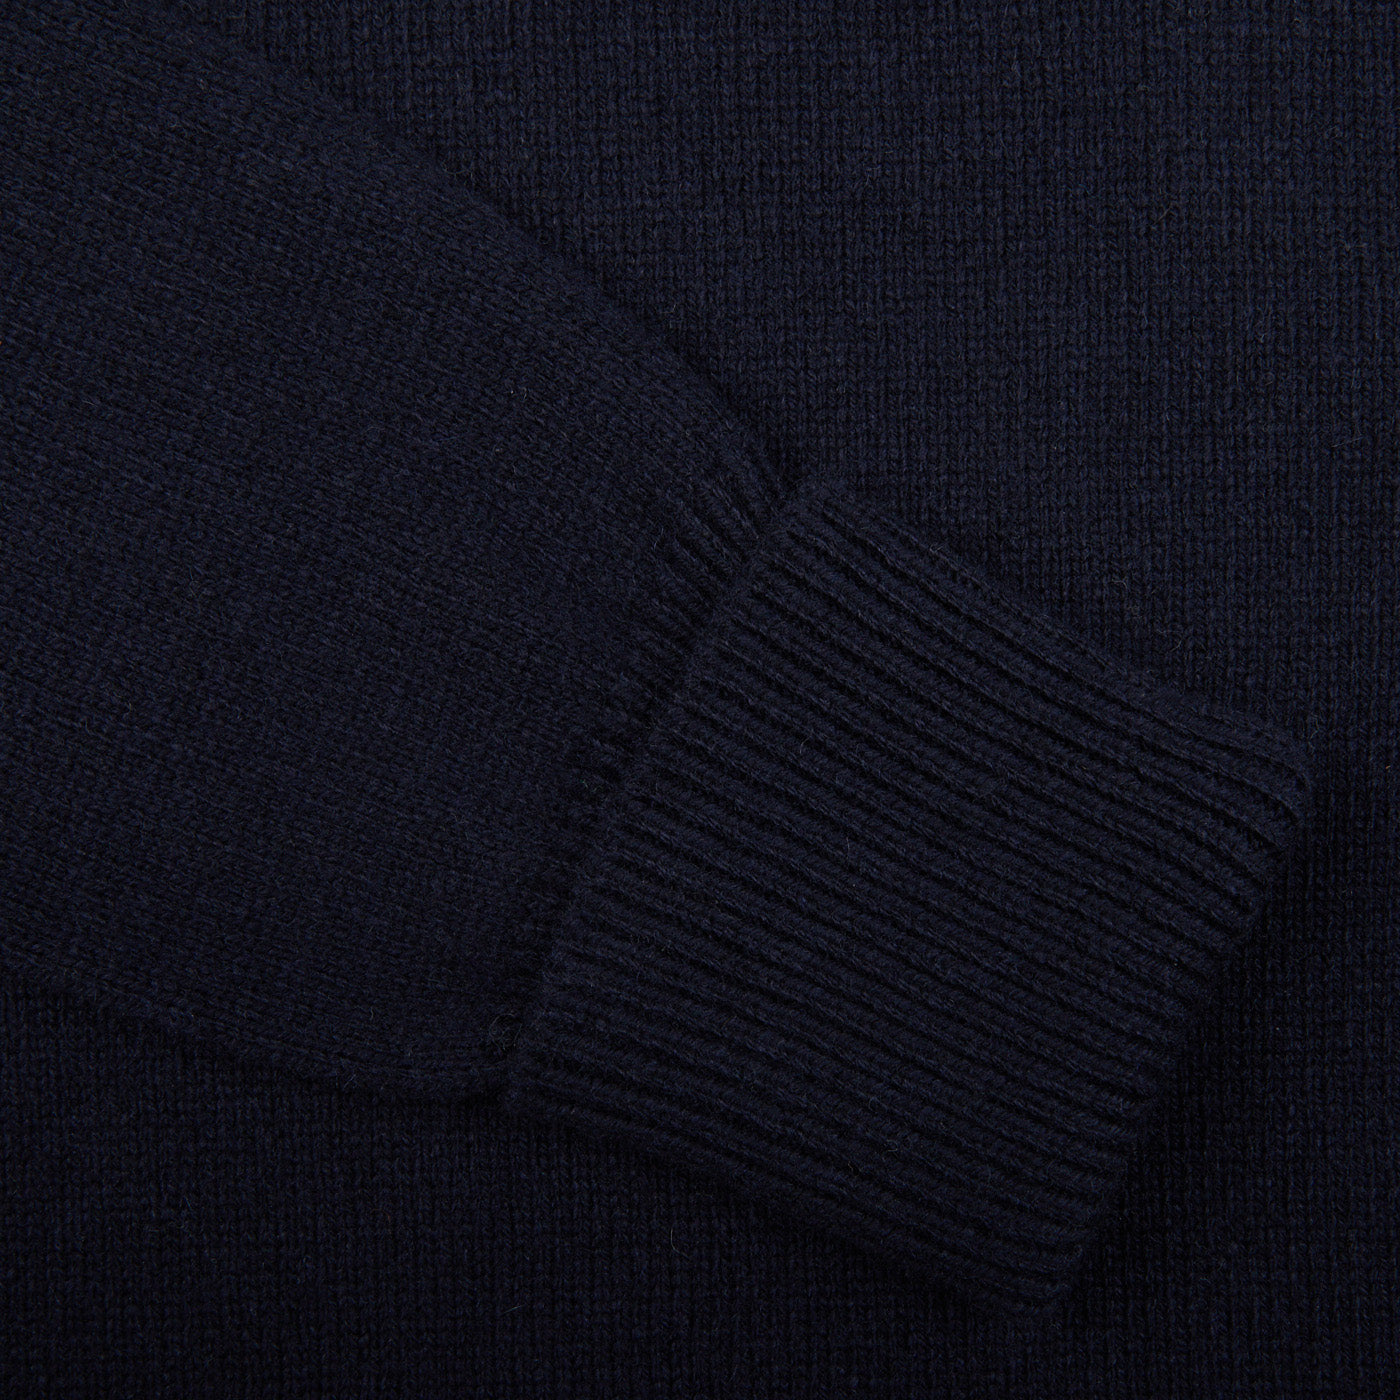 G.R.P Navy Blue Wool Cashmere Mock Neck Sweater Cuff